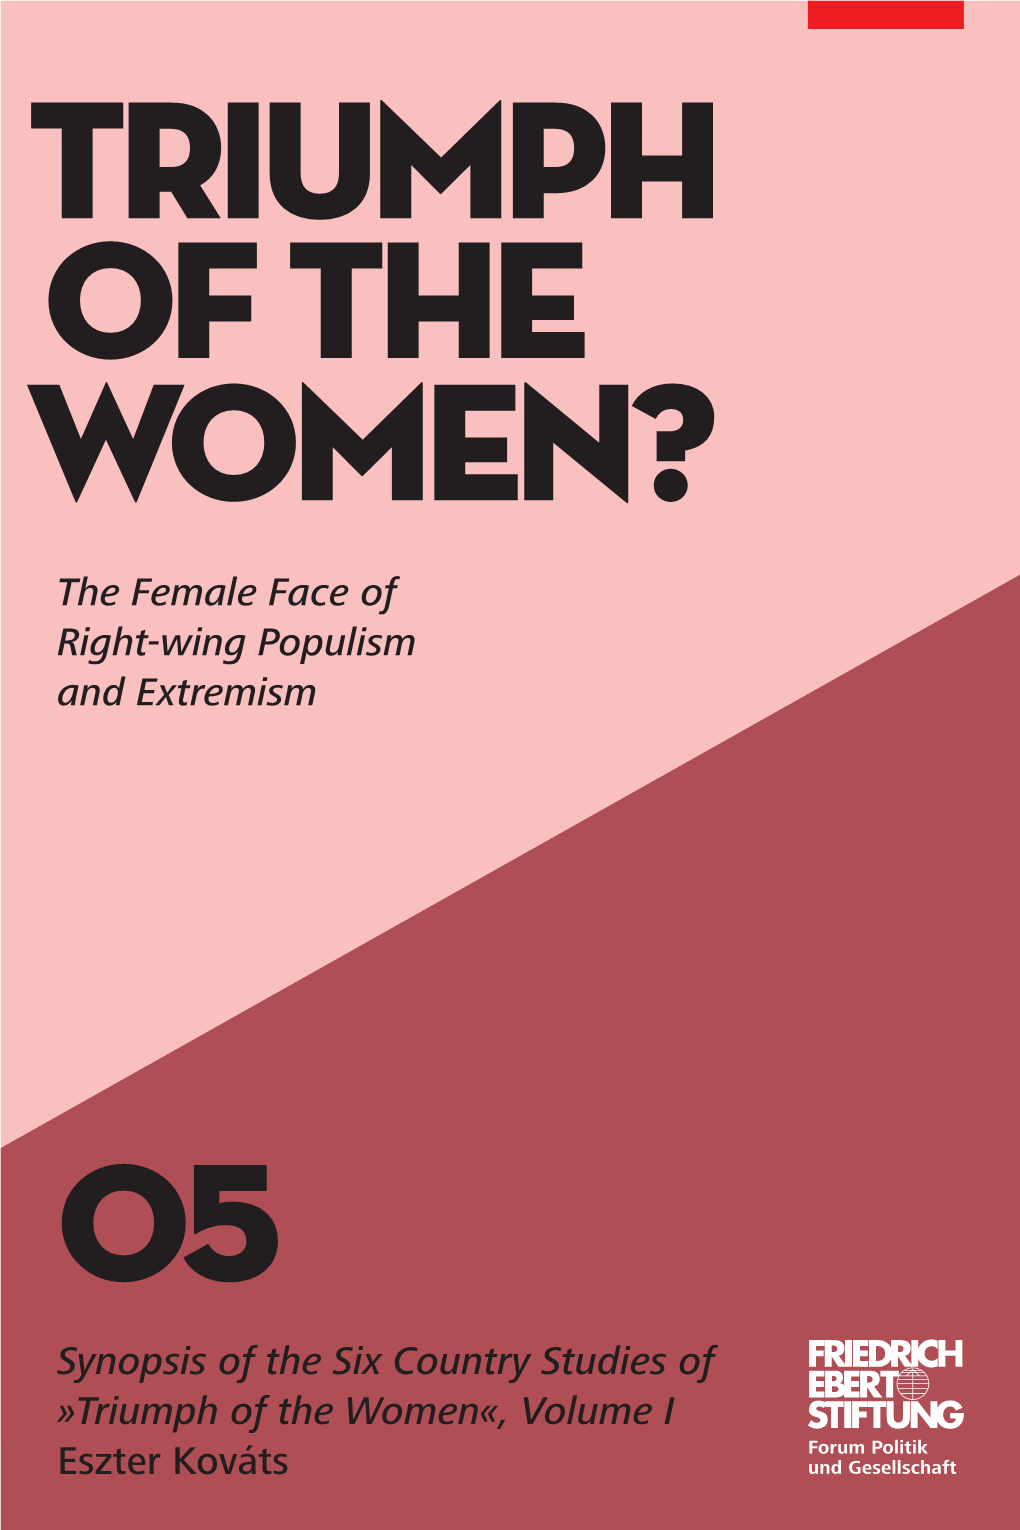 Volume I Eszter Kováts the Female Face of Right-Wing Populism